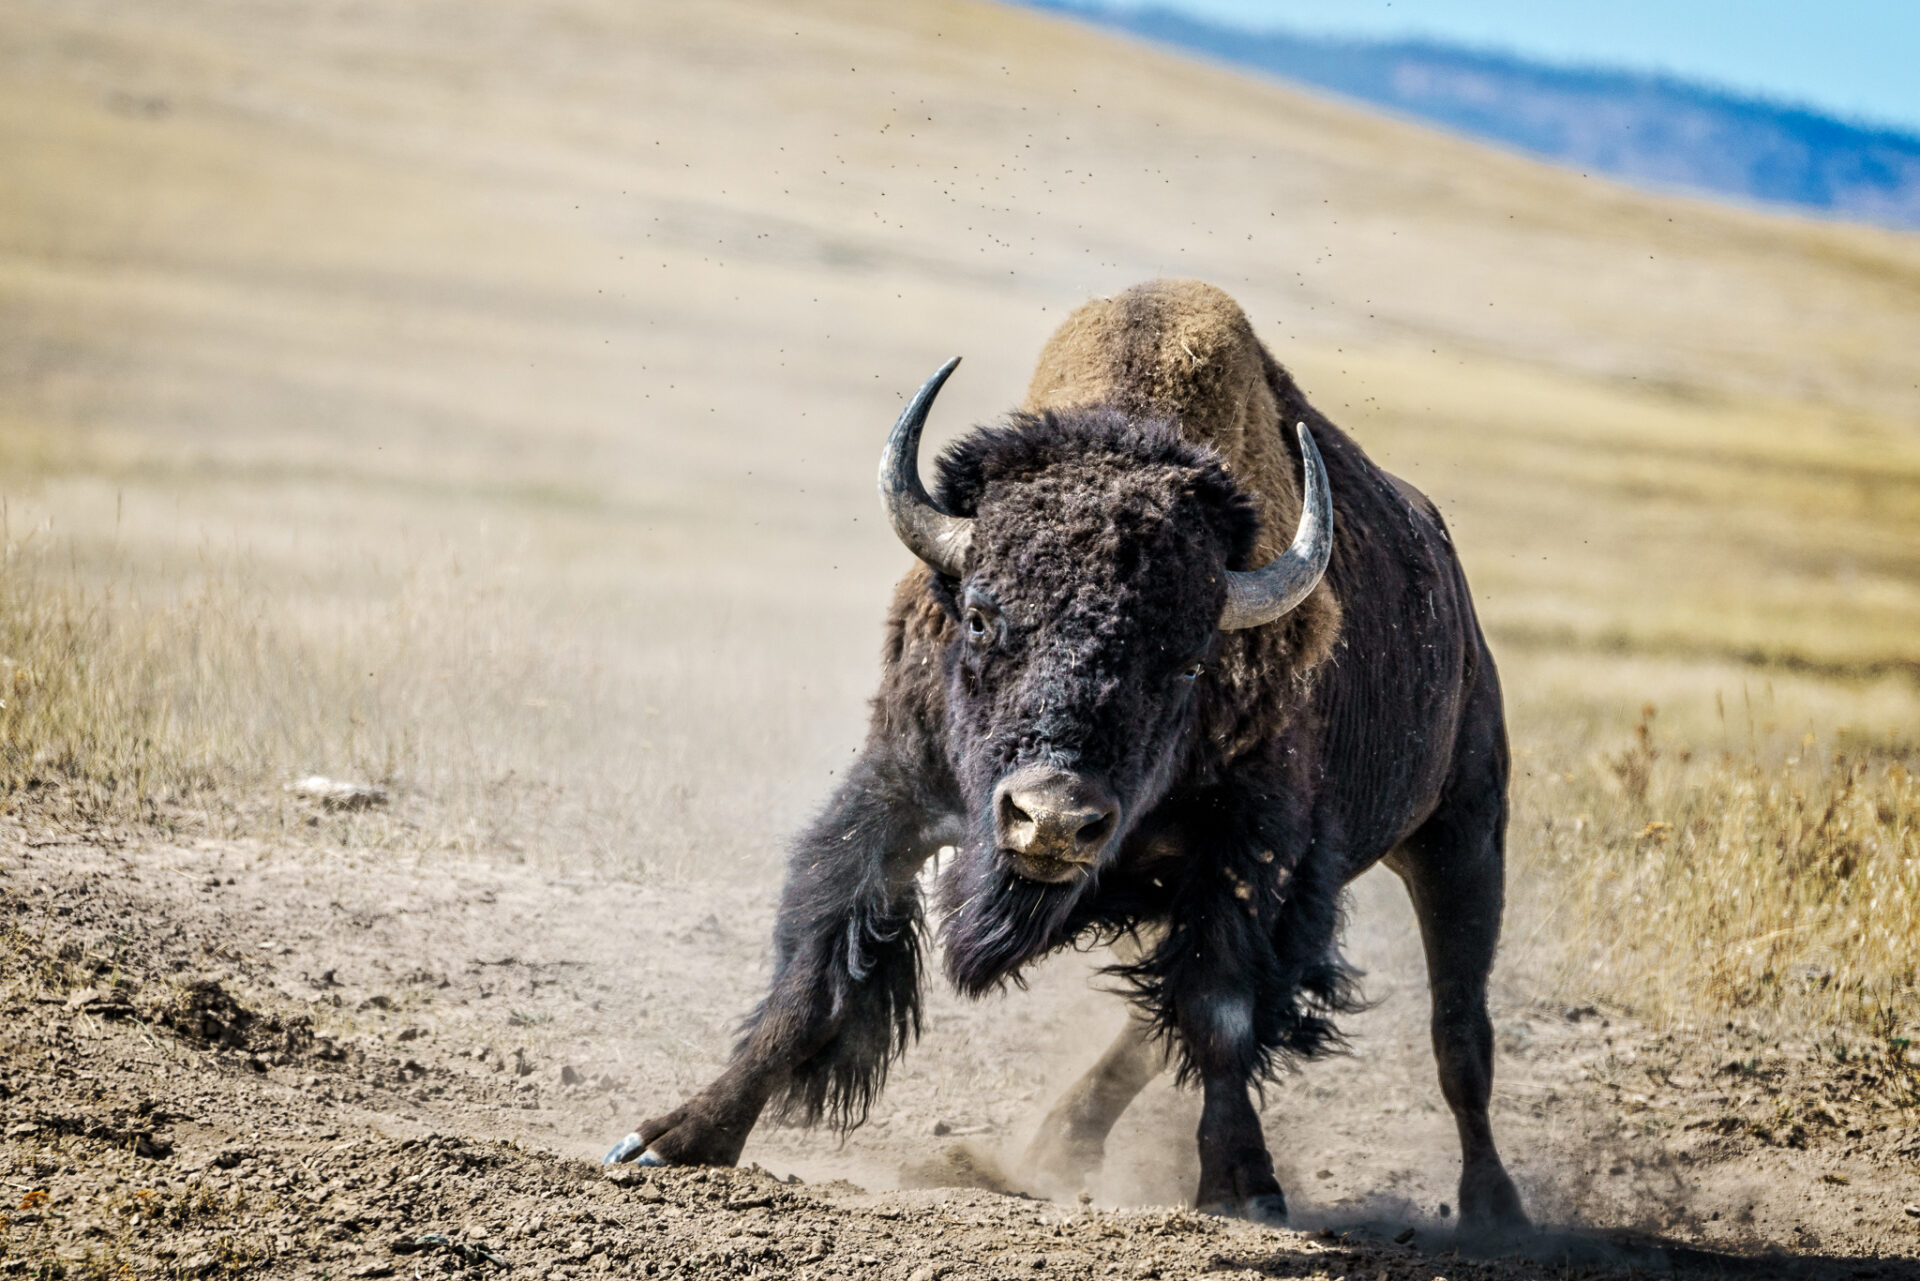 Apparently Charging Buffalo at National Bison Range